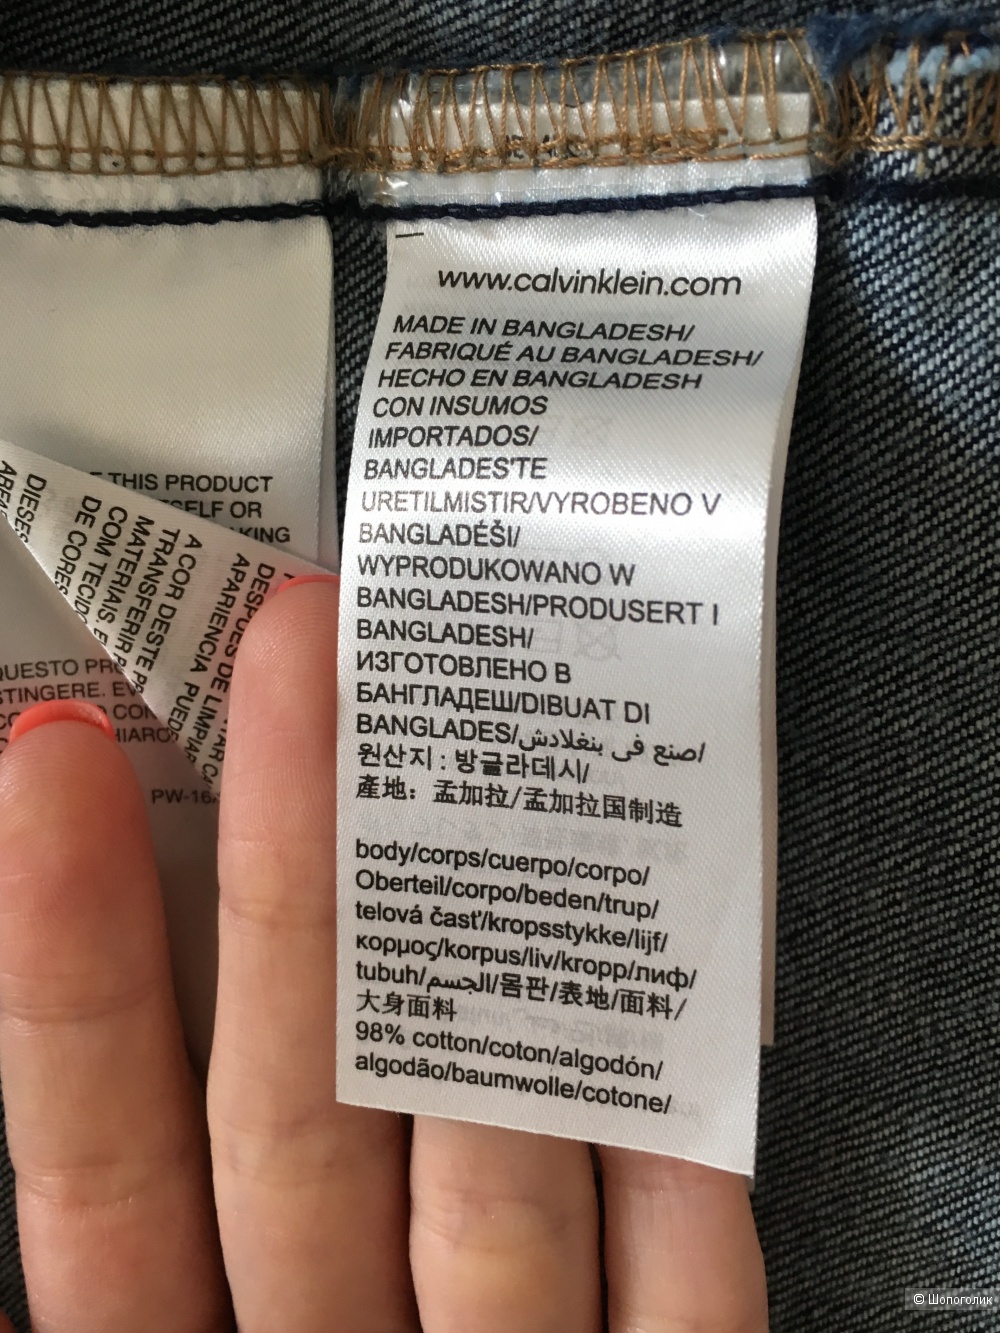 Куртка джинсовая Calvin Klein, размер S